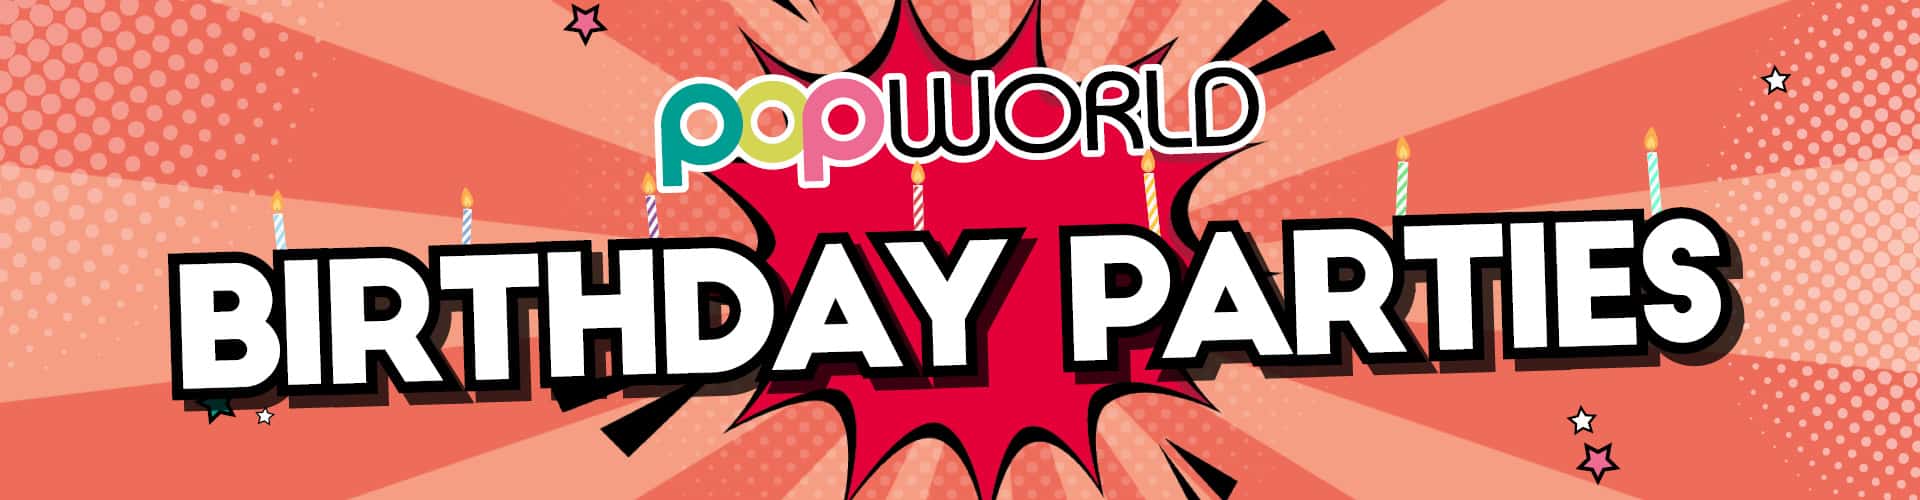 Celebrate your Birthday at Popworld Manchester